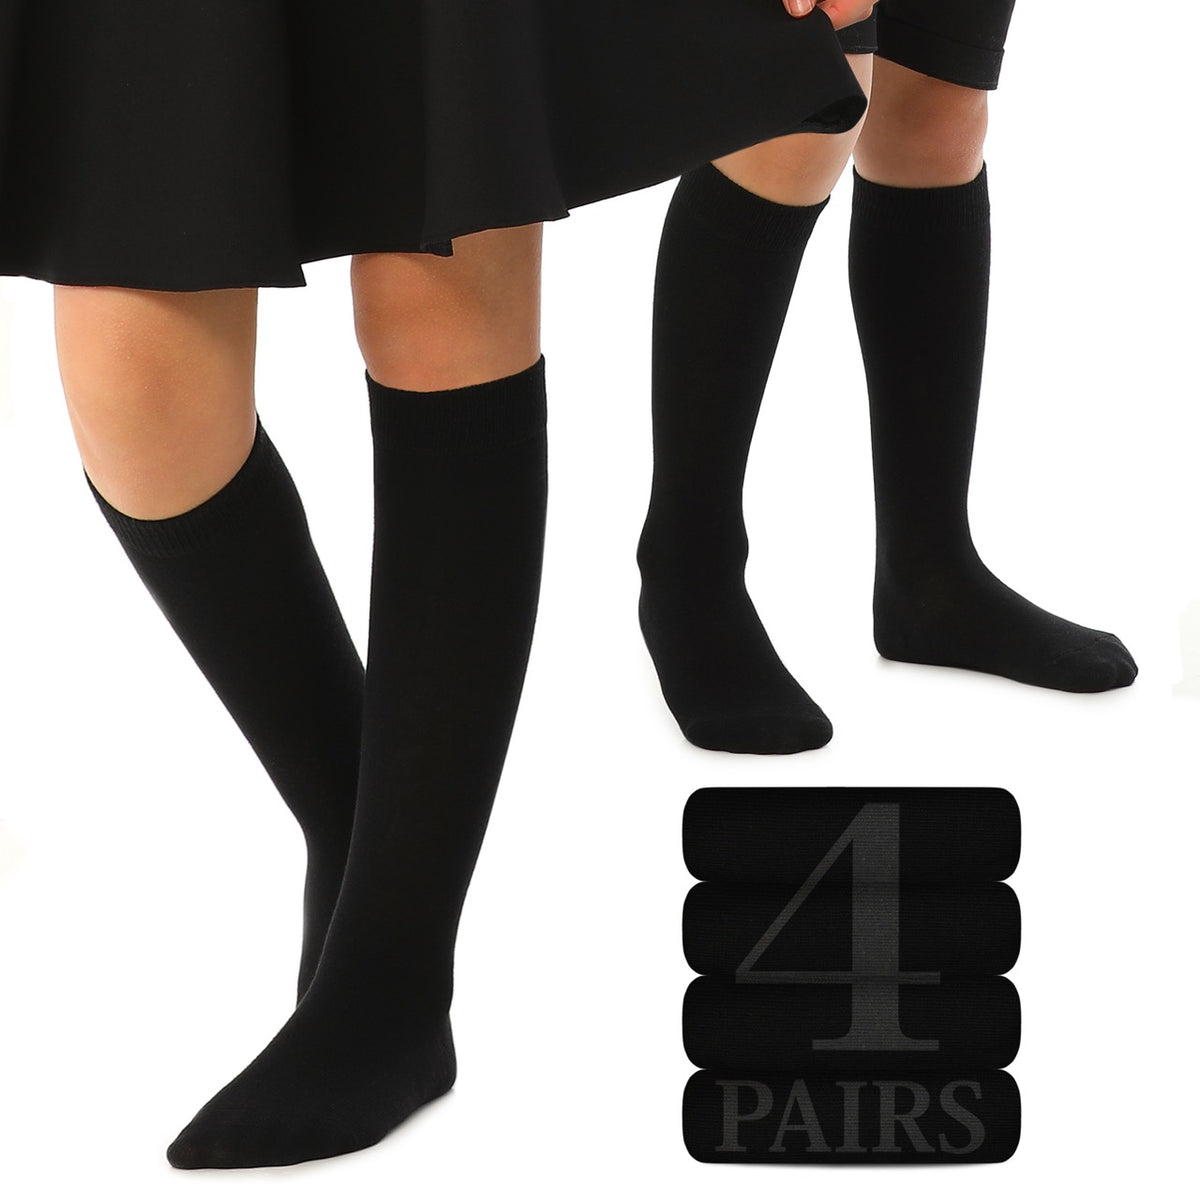 Kids' Plain Cotton Dress Knee-High Socks, 4 Pairs